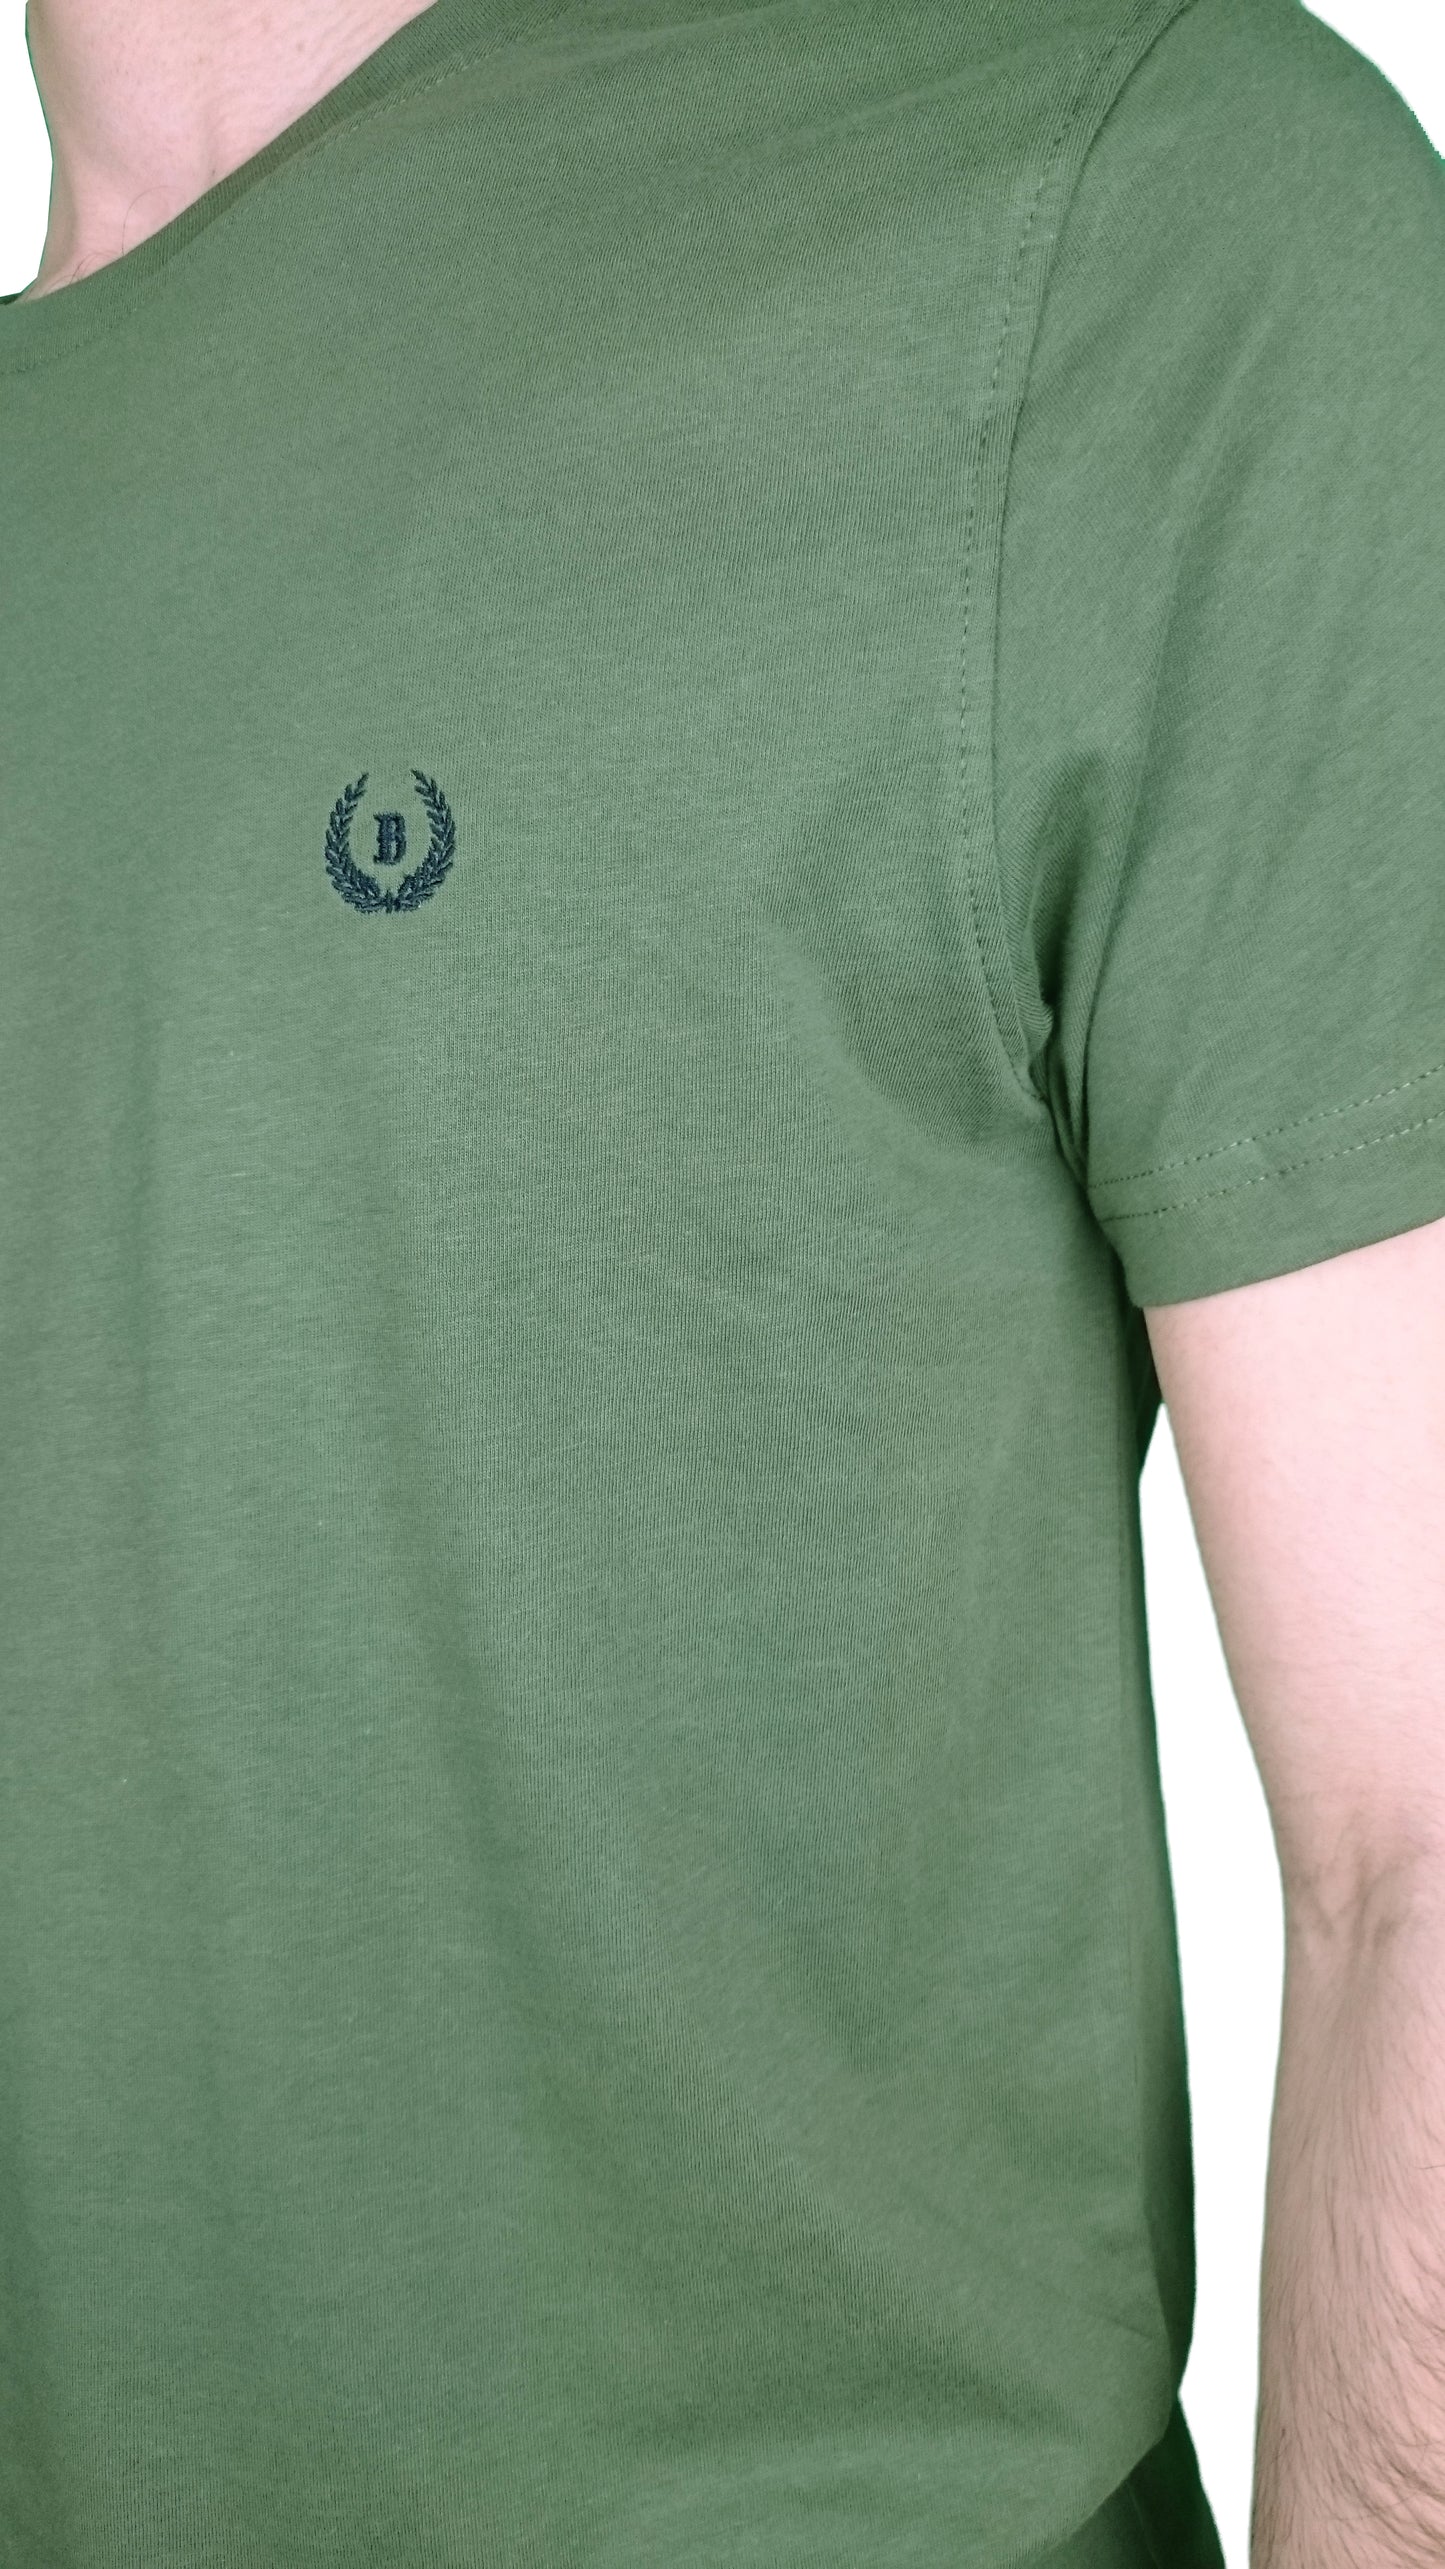 T-Shirt Militare (908)